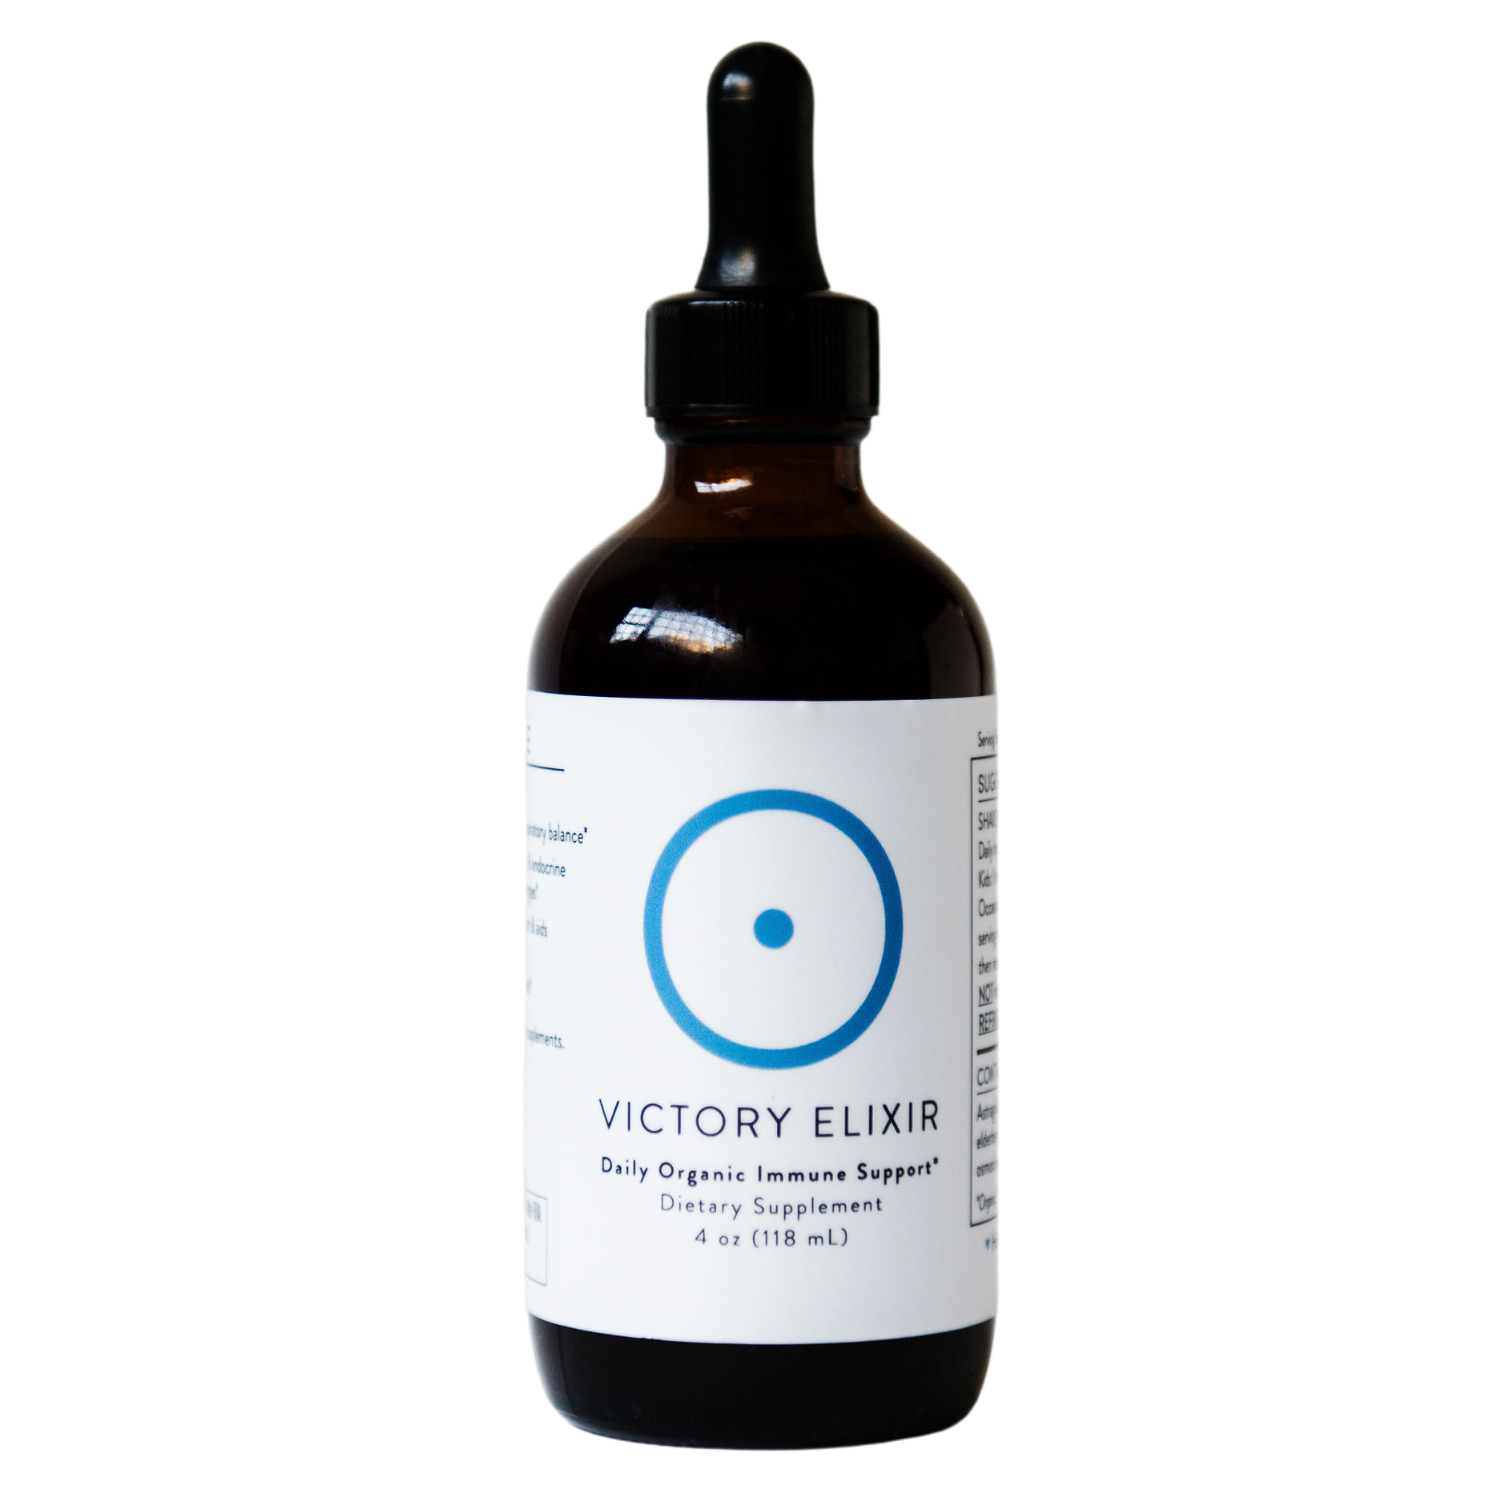 Restore Organic Postpartum Recovery Elixir - Supplement Drops - 2oz